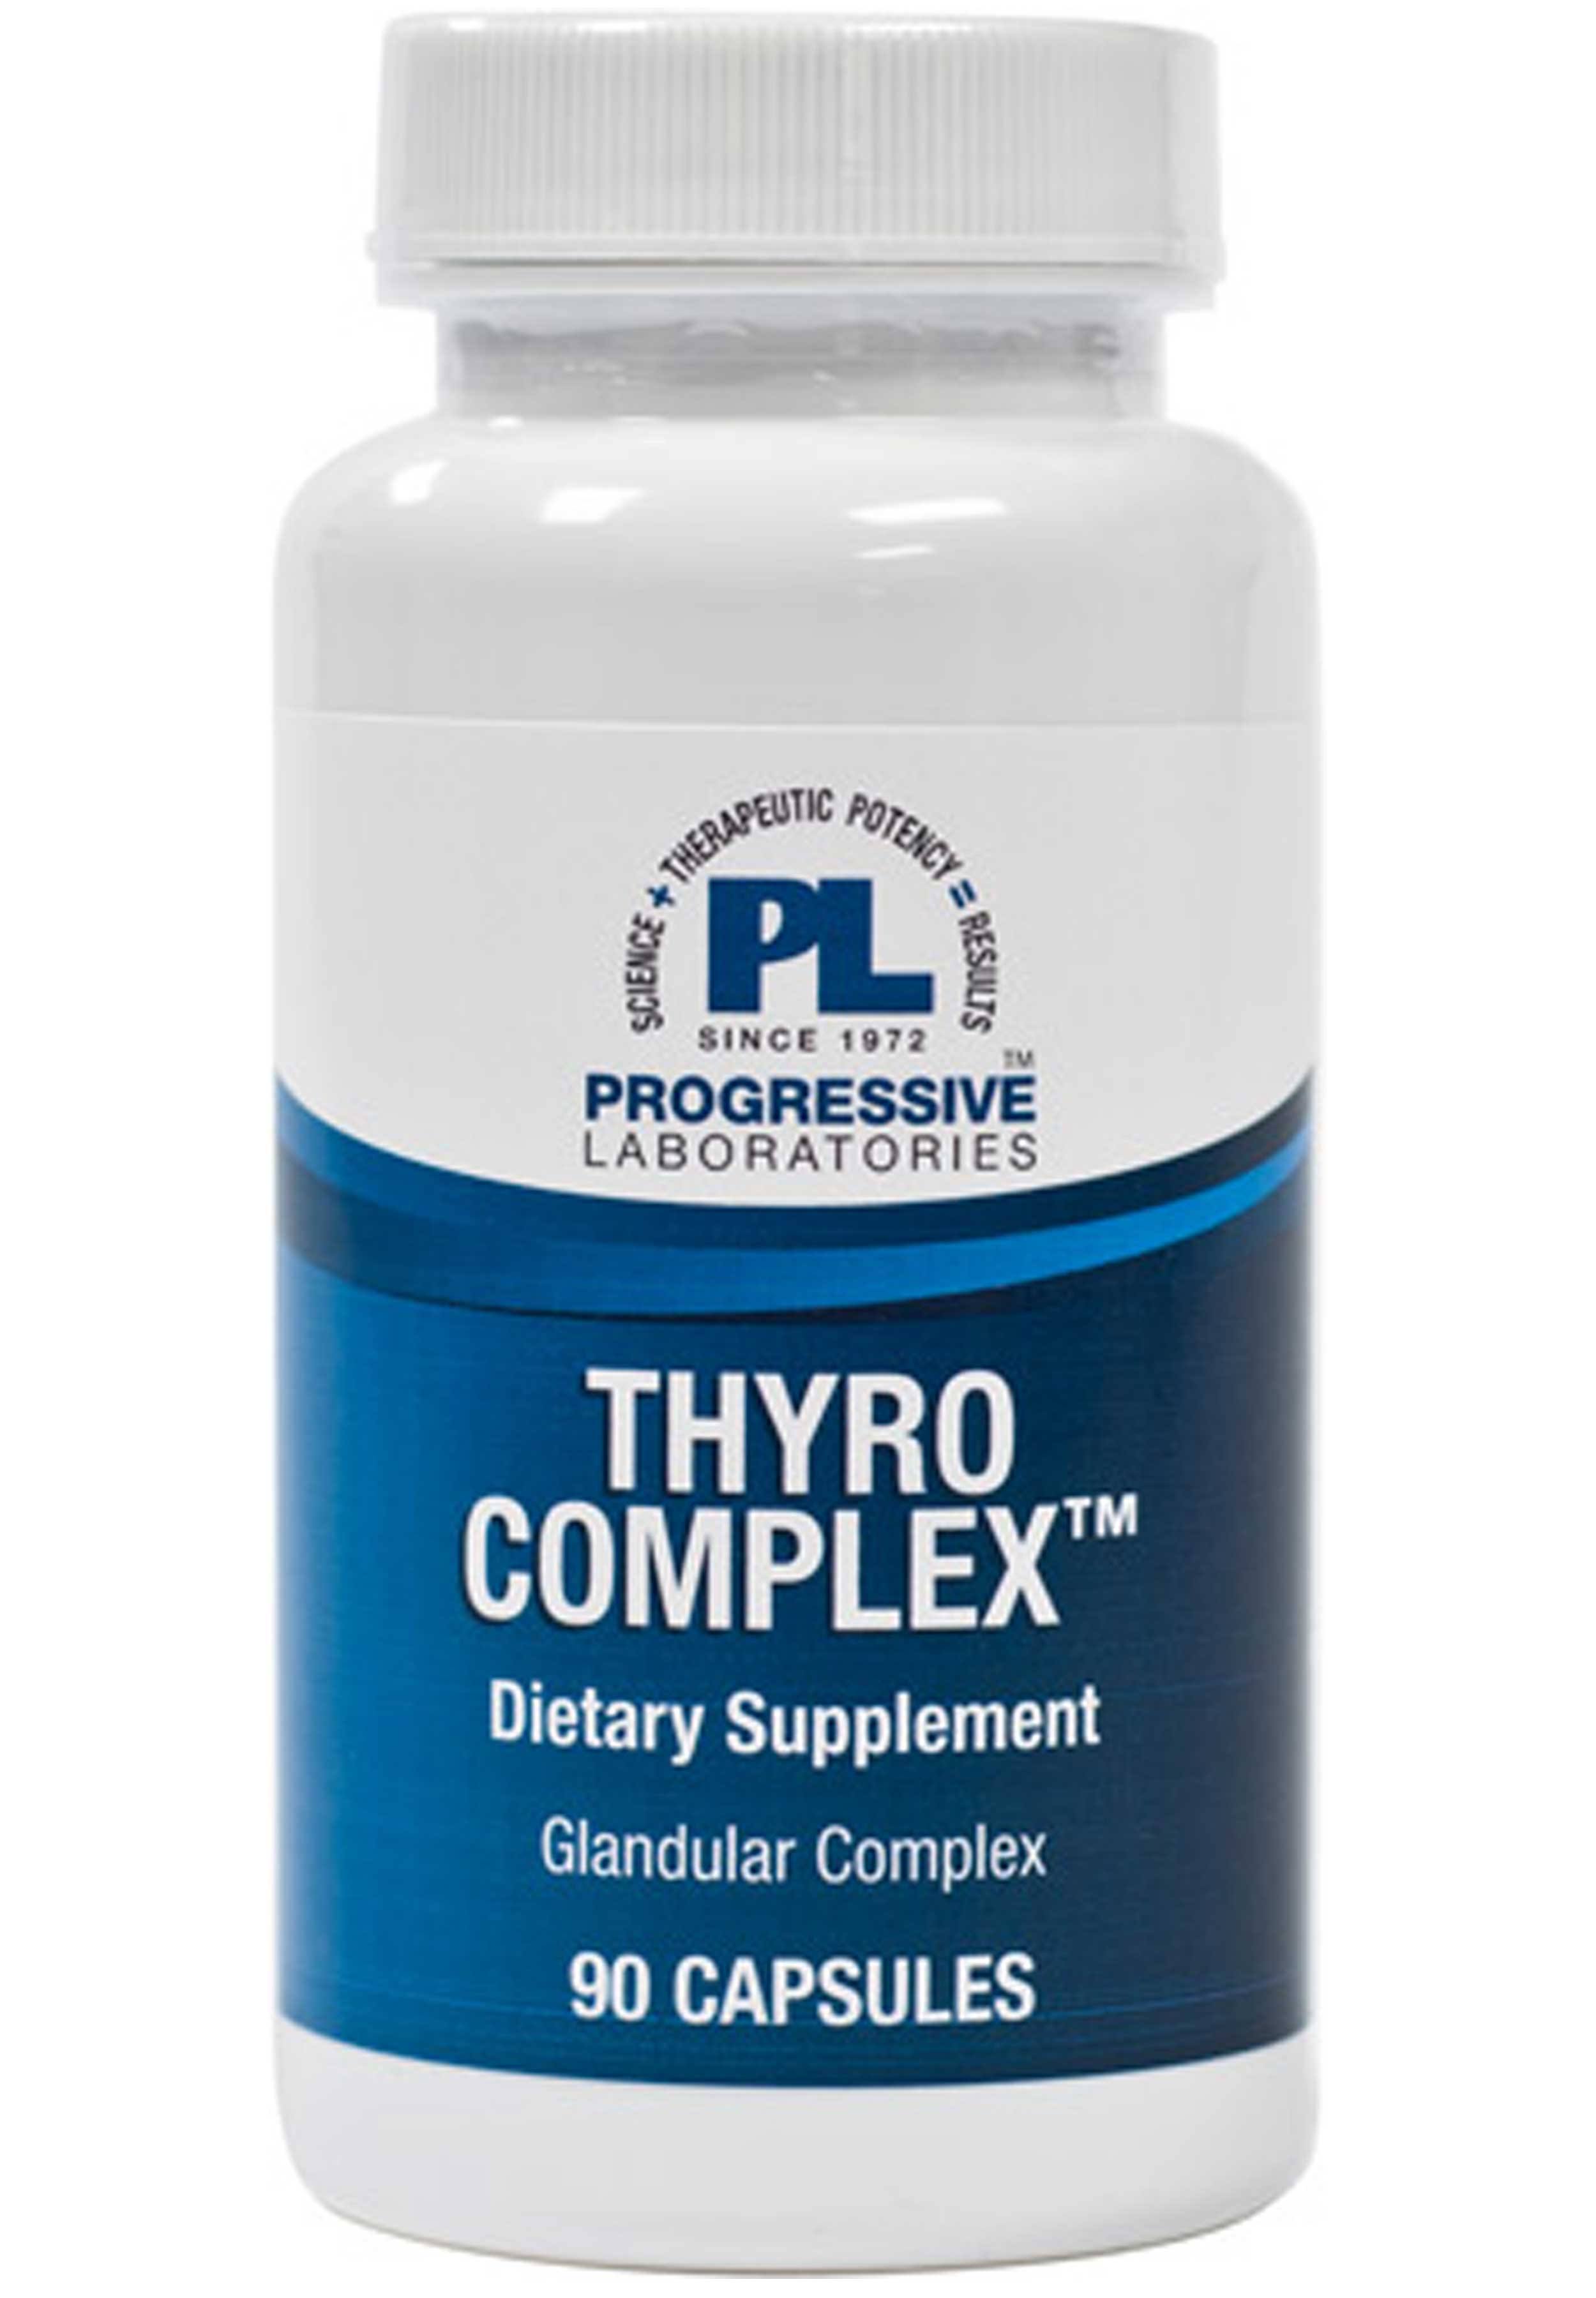 Progressive Laboratories Thyro Complex Dietary Supplement - 90 Capsules